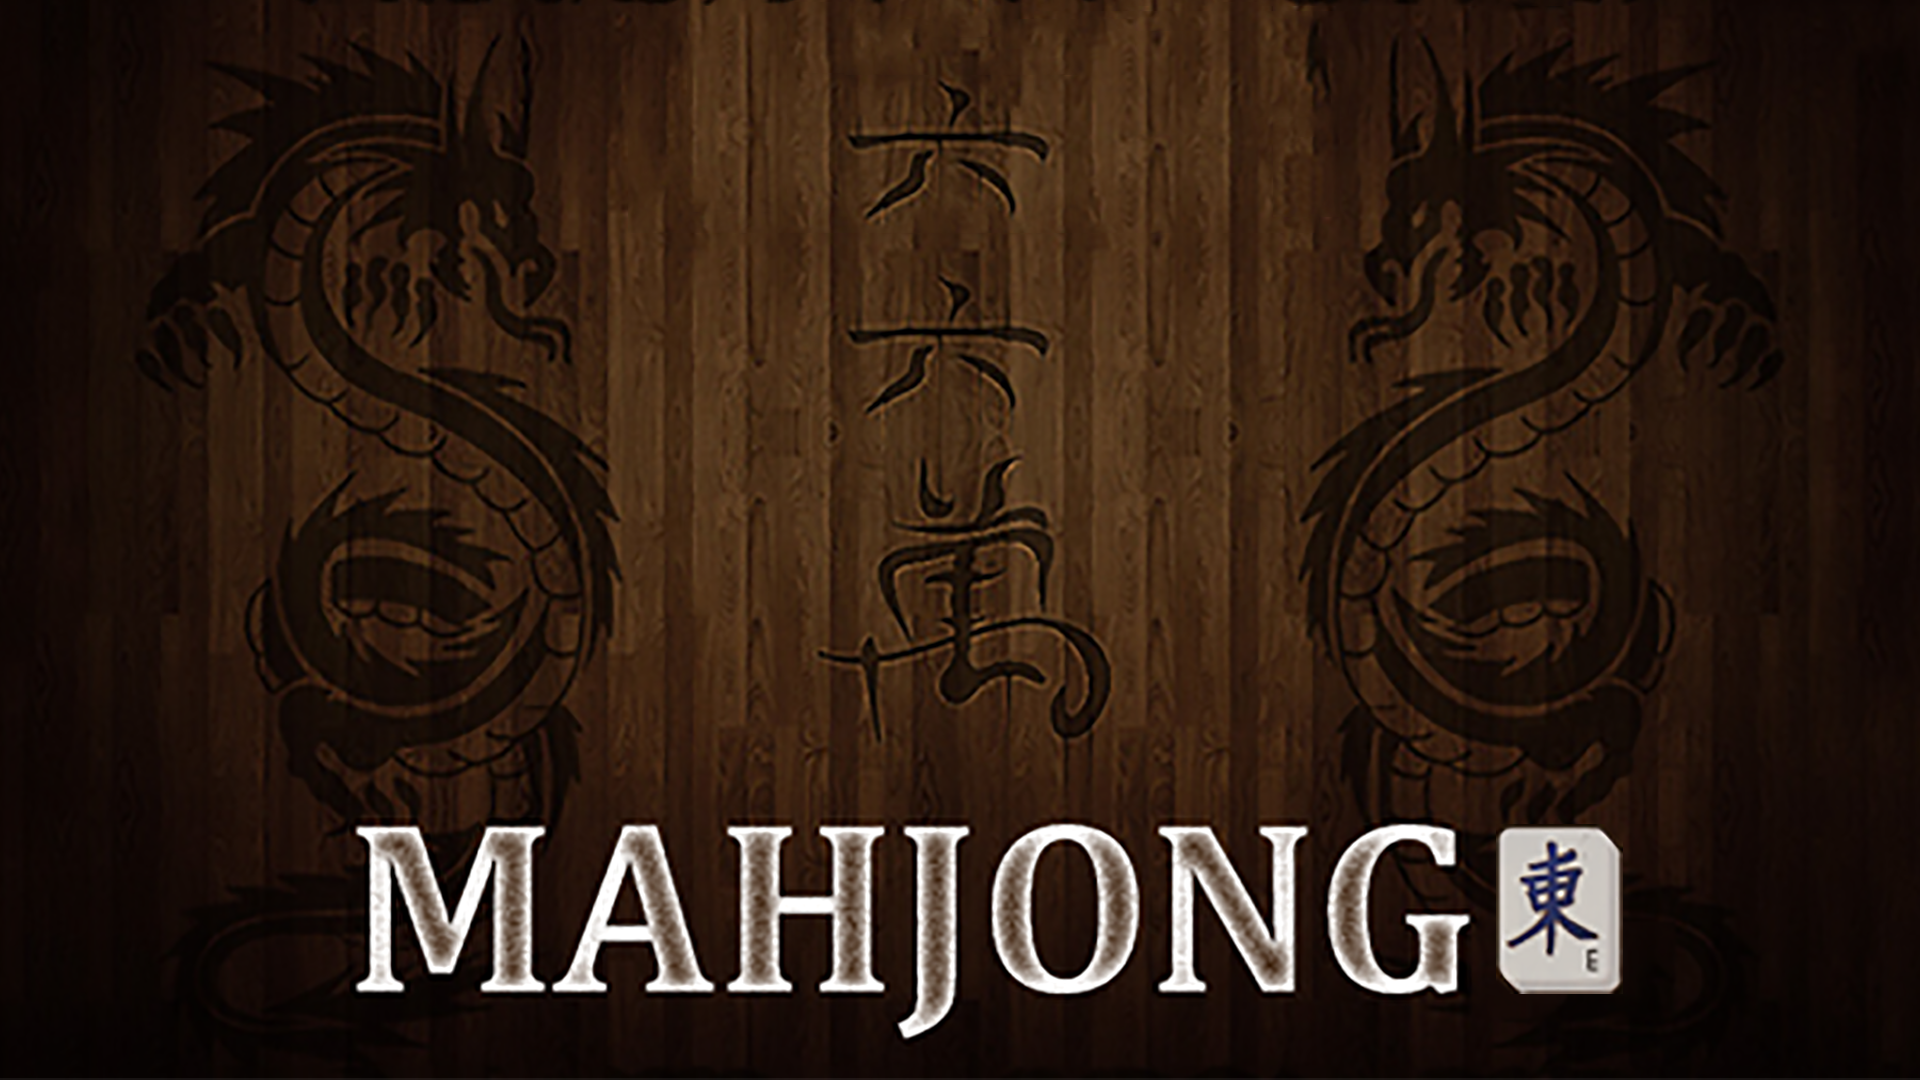 Get Mahjong Deluxe Free - Microsoft Store